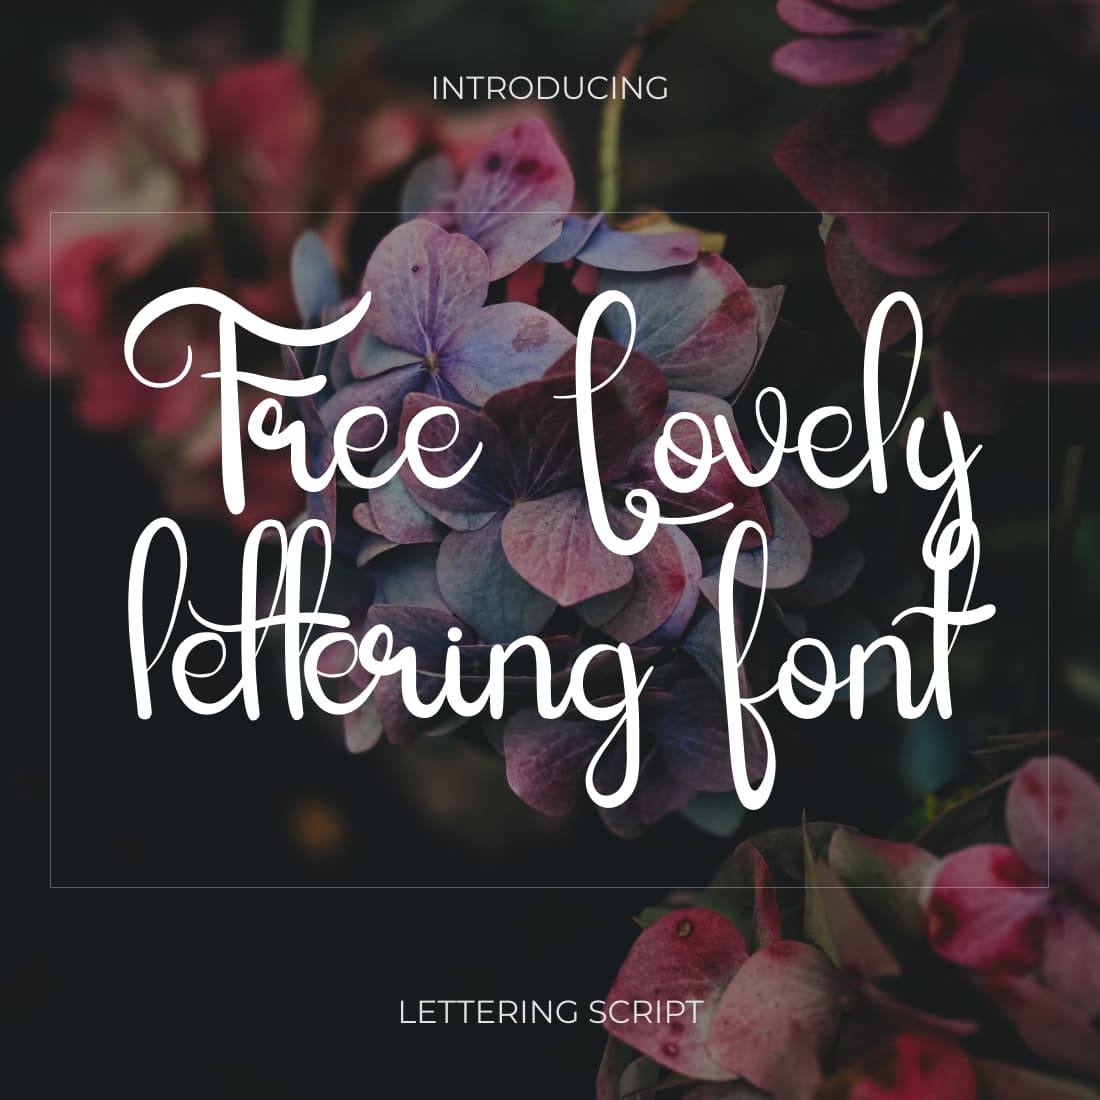 Free Lovely lettering font image.